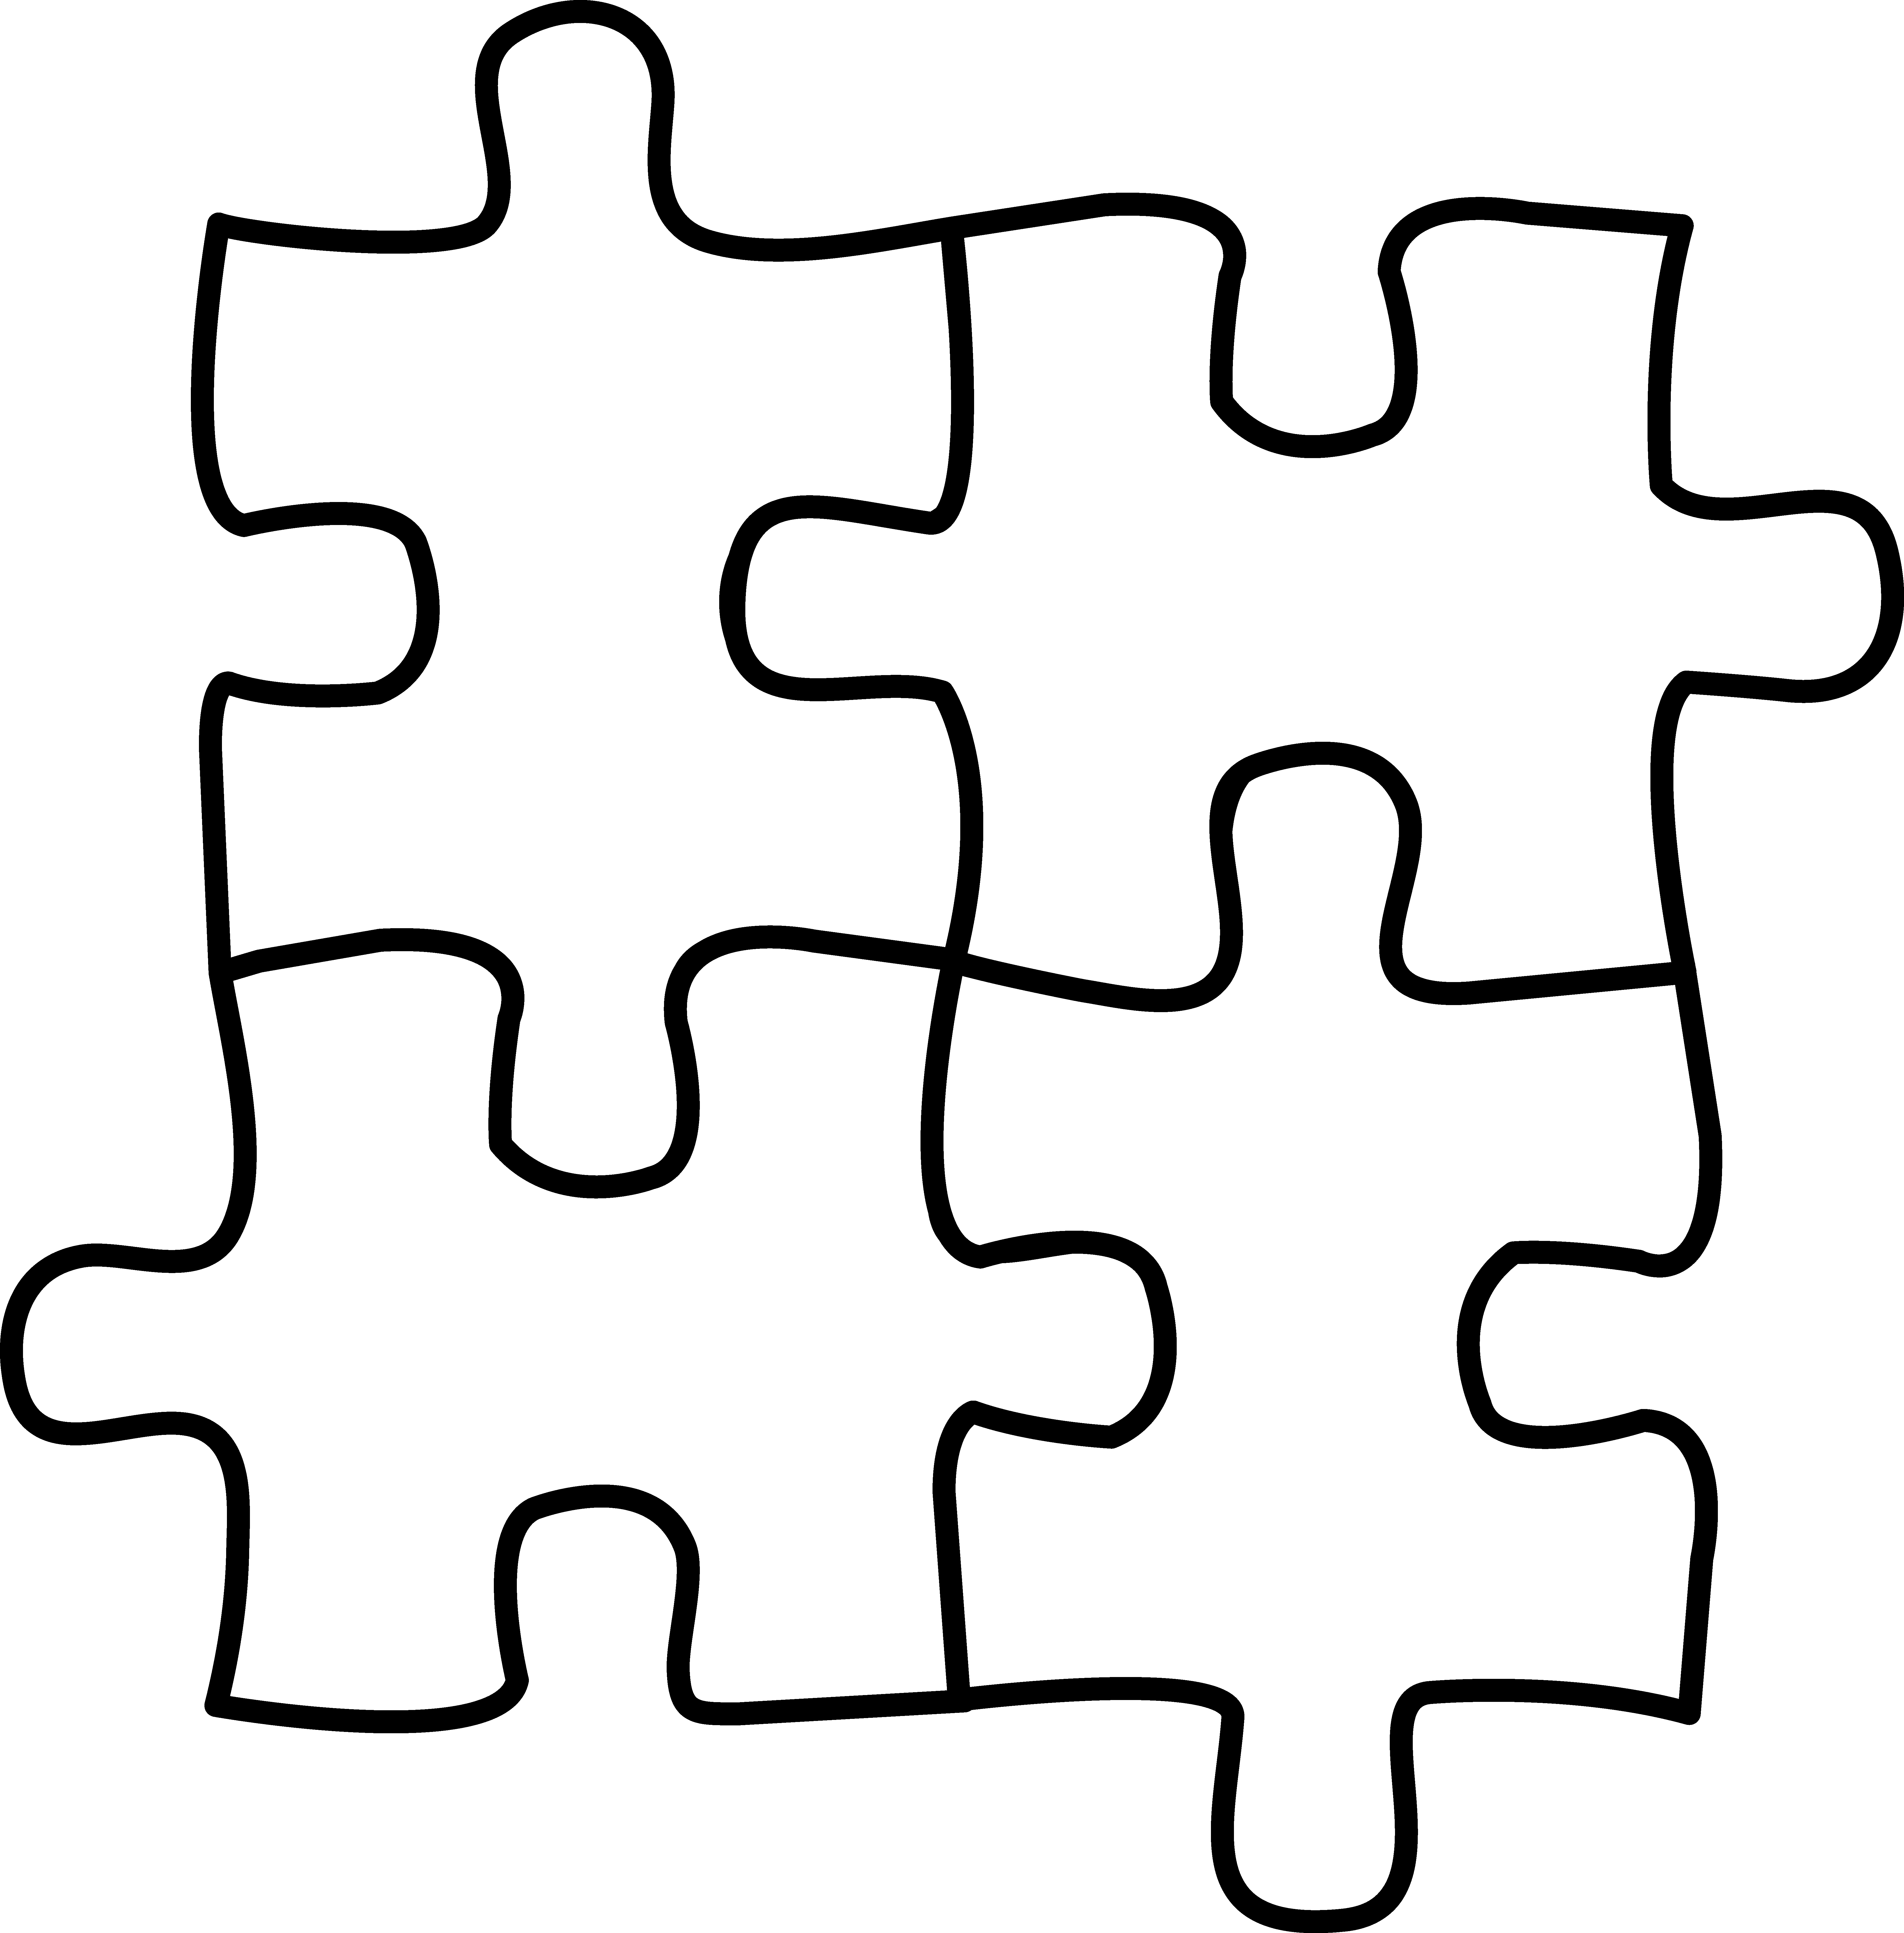 Multiplication clipart math puzzle. Media center pinterest pieces